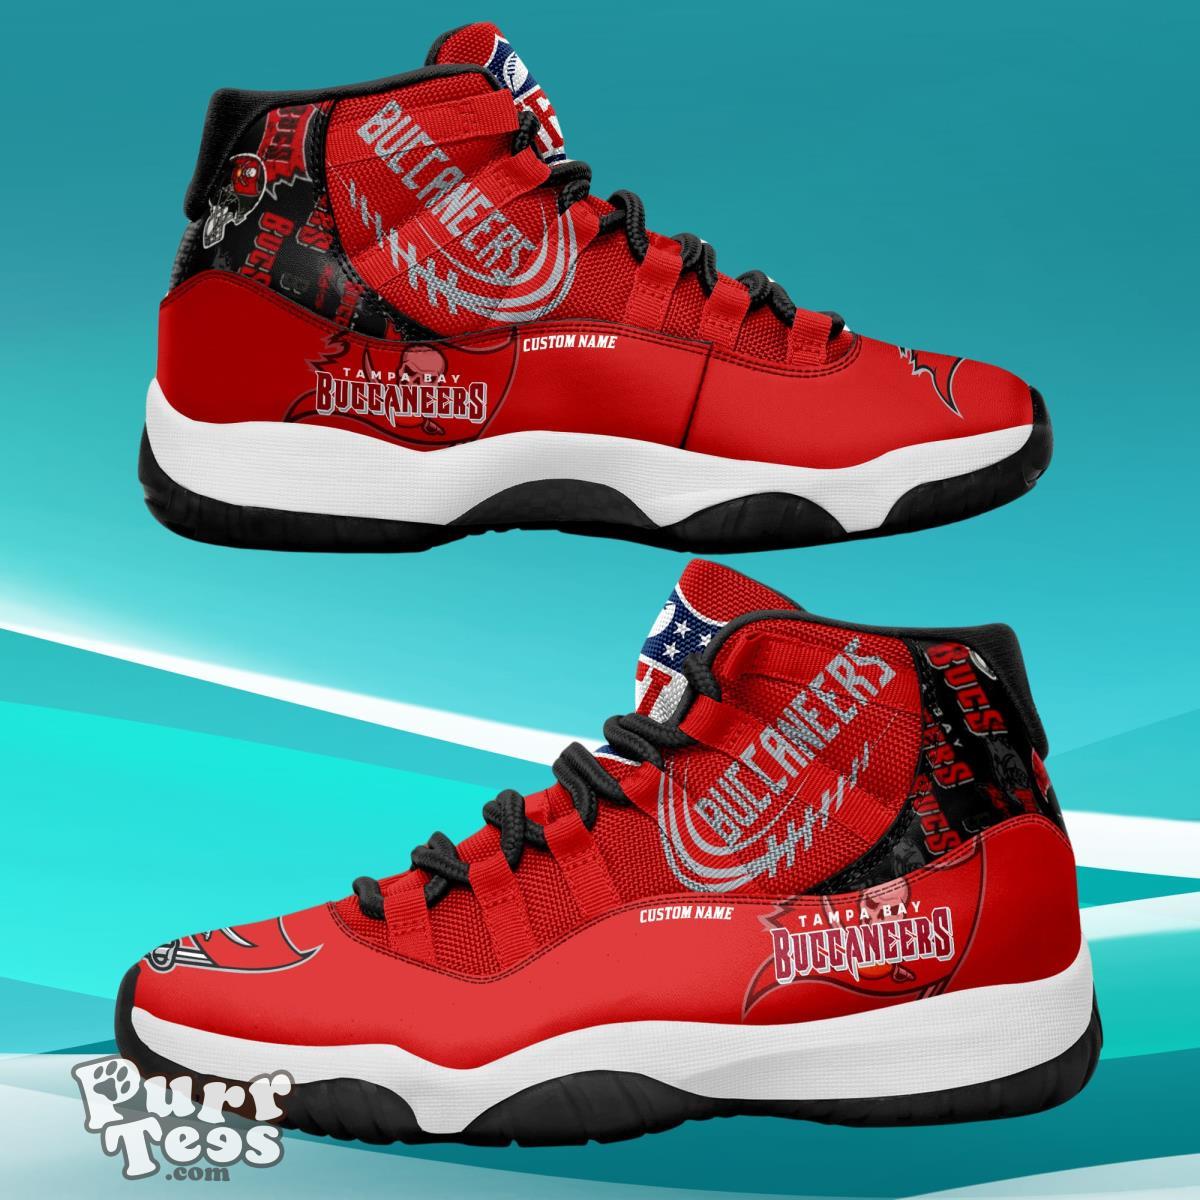 Tampa Bay Buccaneers Custom Name Air Jordan 11 Sneaker Style Gift For Men And Women Product Photo 1